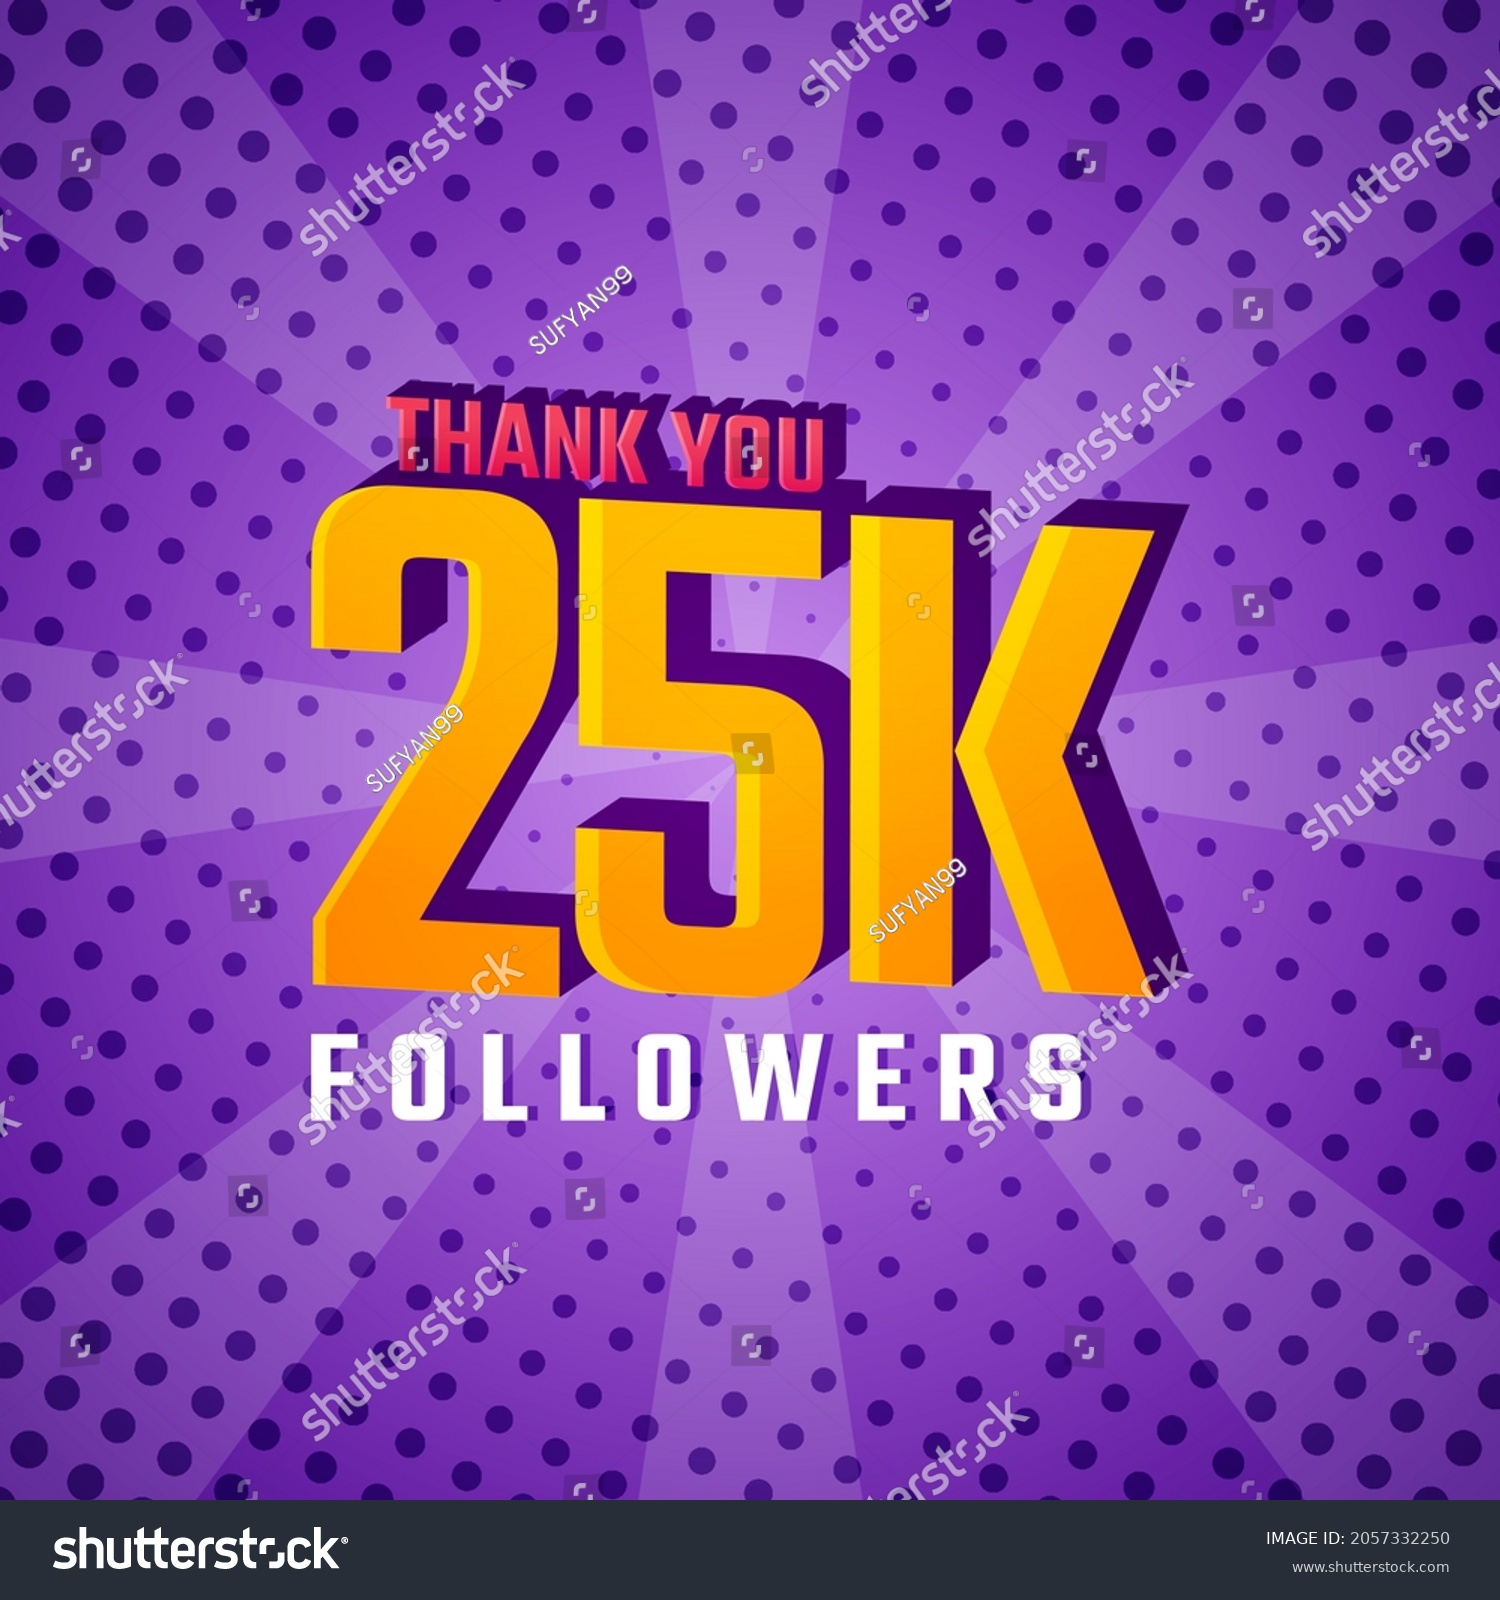 SVG of Thank You 25 k Followers Card Celebration Vector. 25000 Followers Congratulation Post Social Media Template. svg